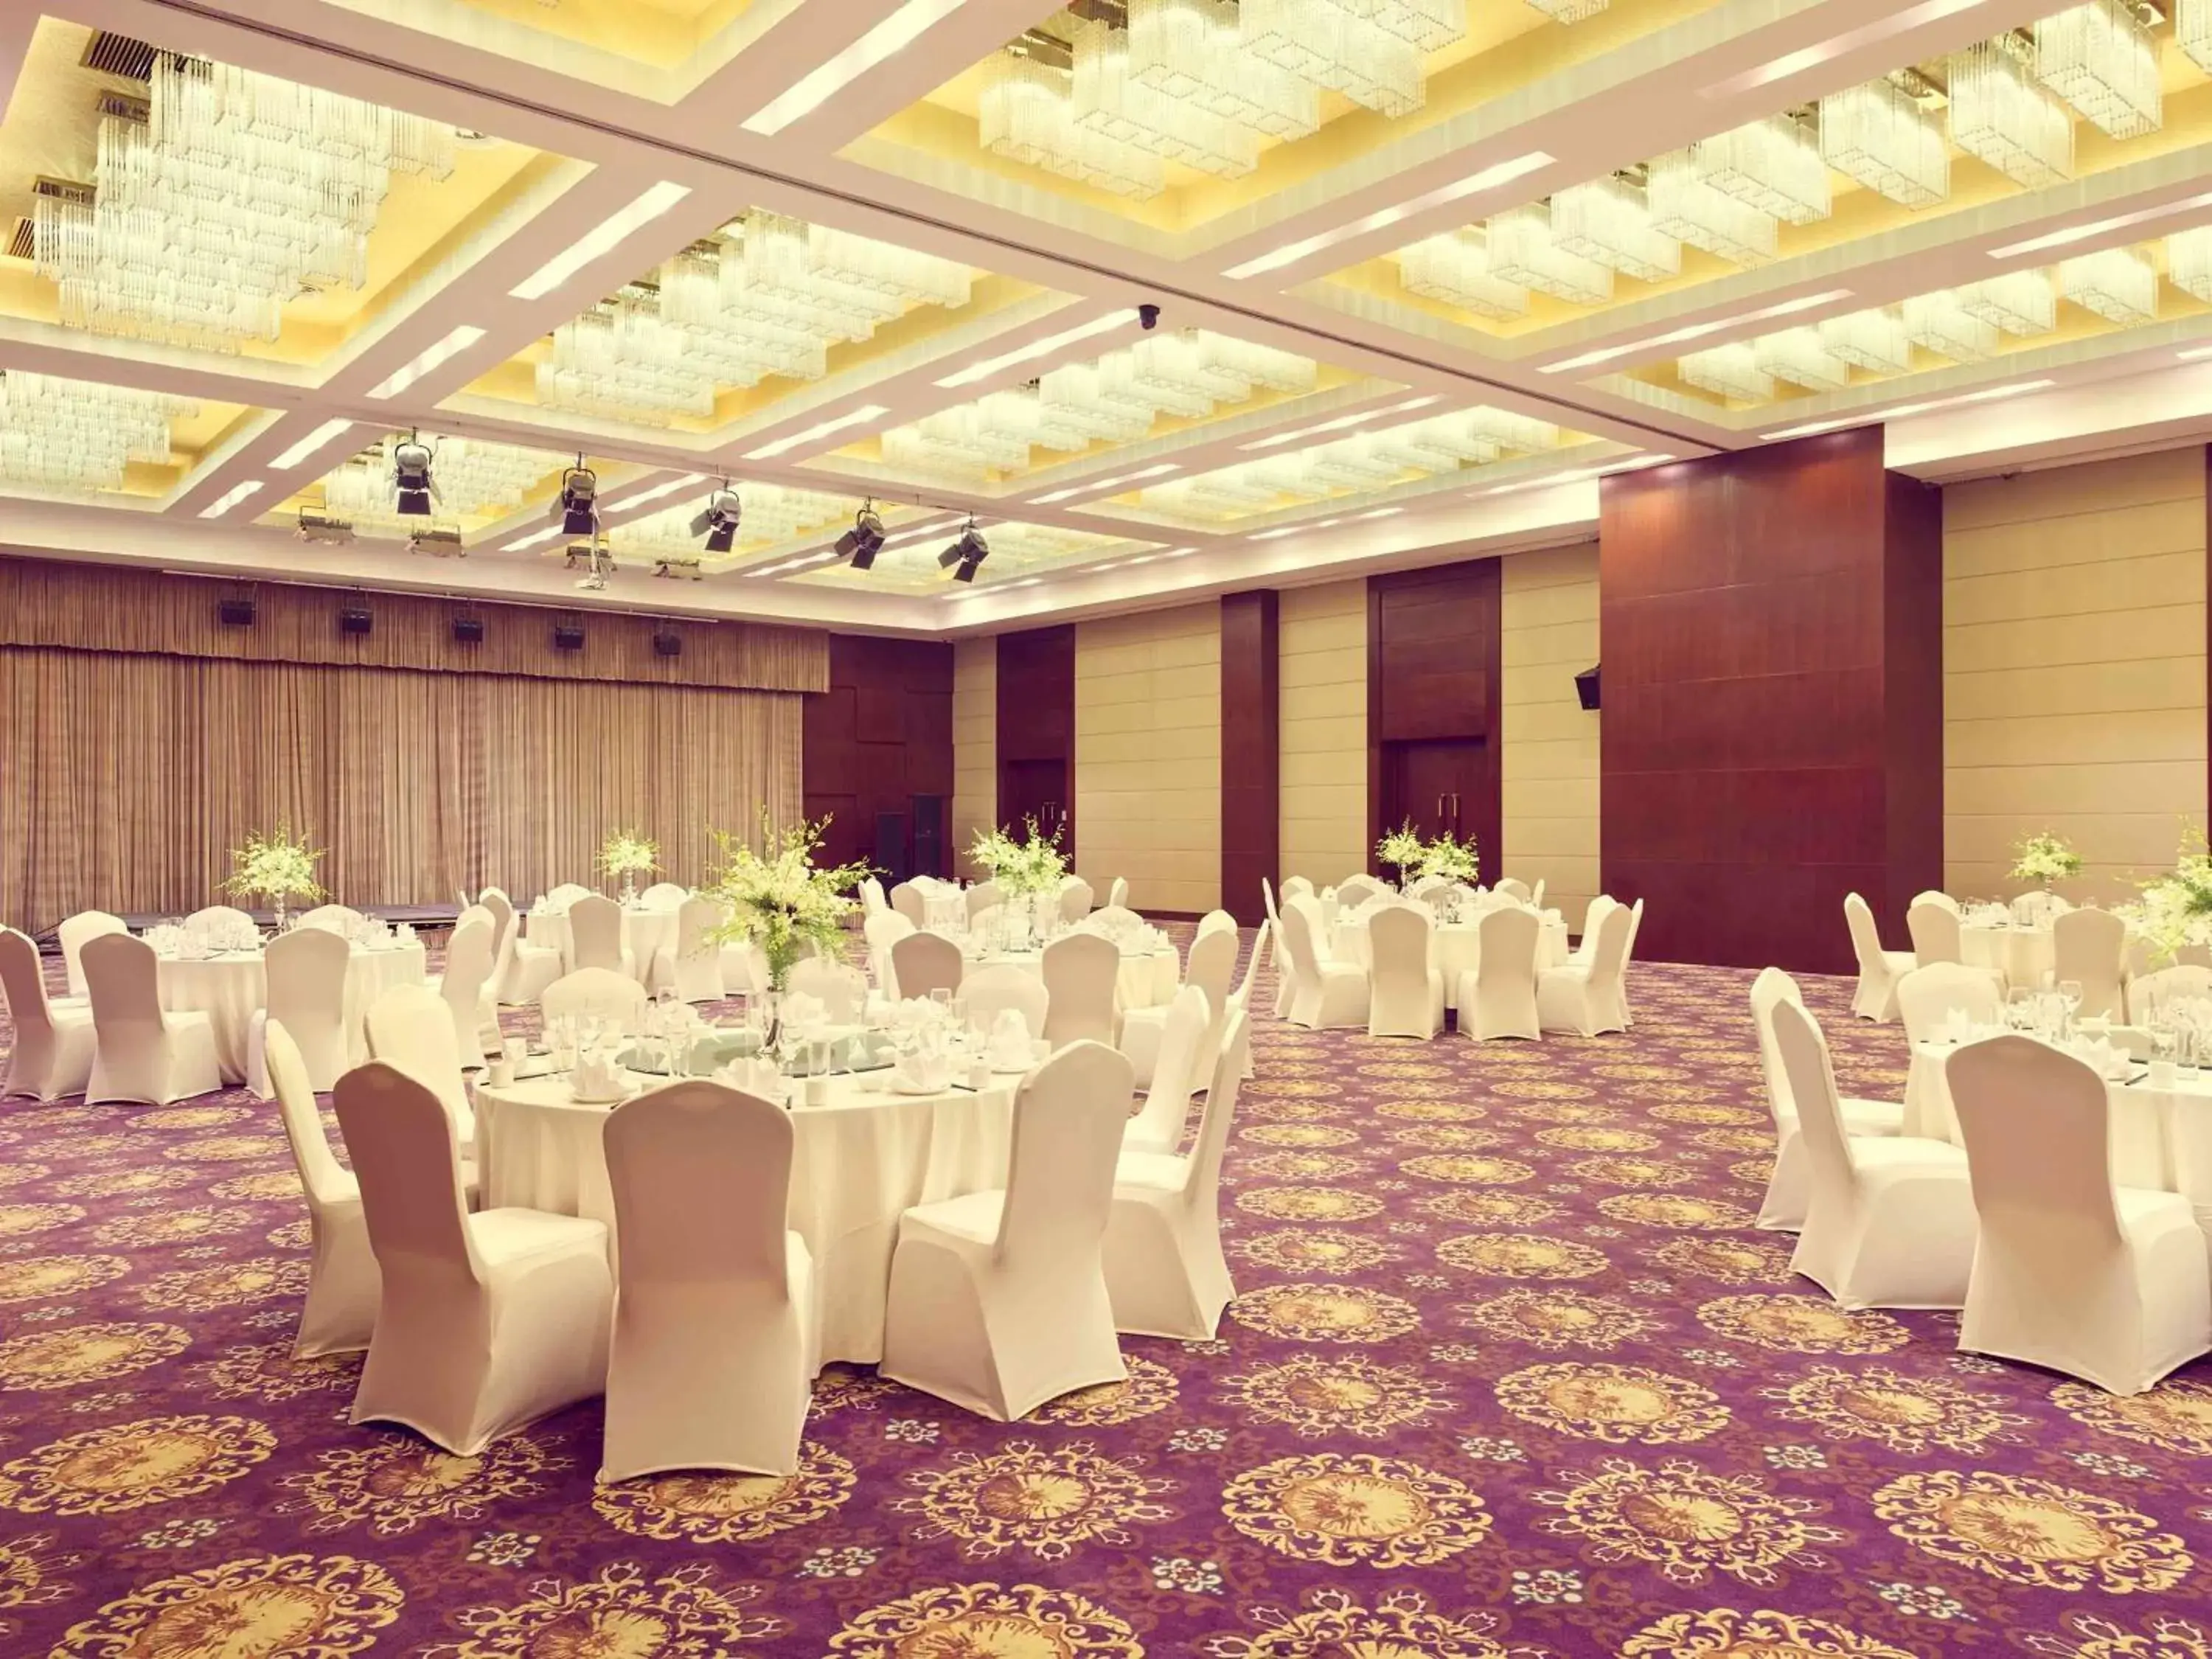 Banquet/Function facilities, Banquet Facilities in Mercure Beijing Downtown Hotel